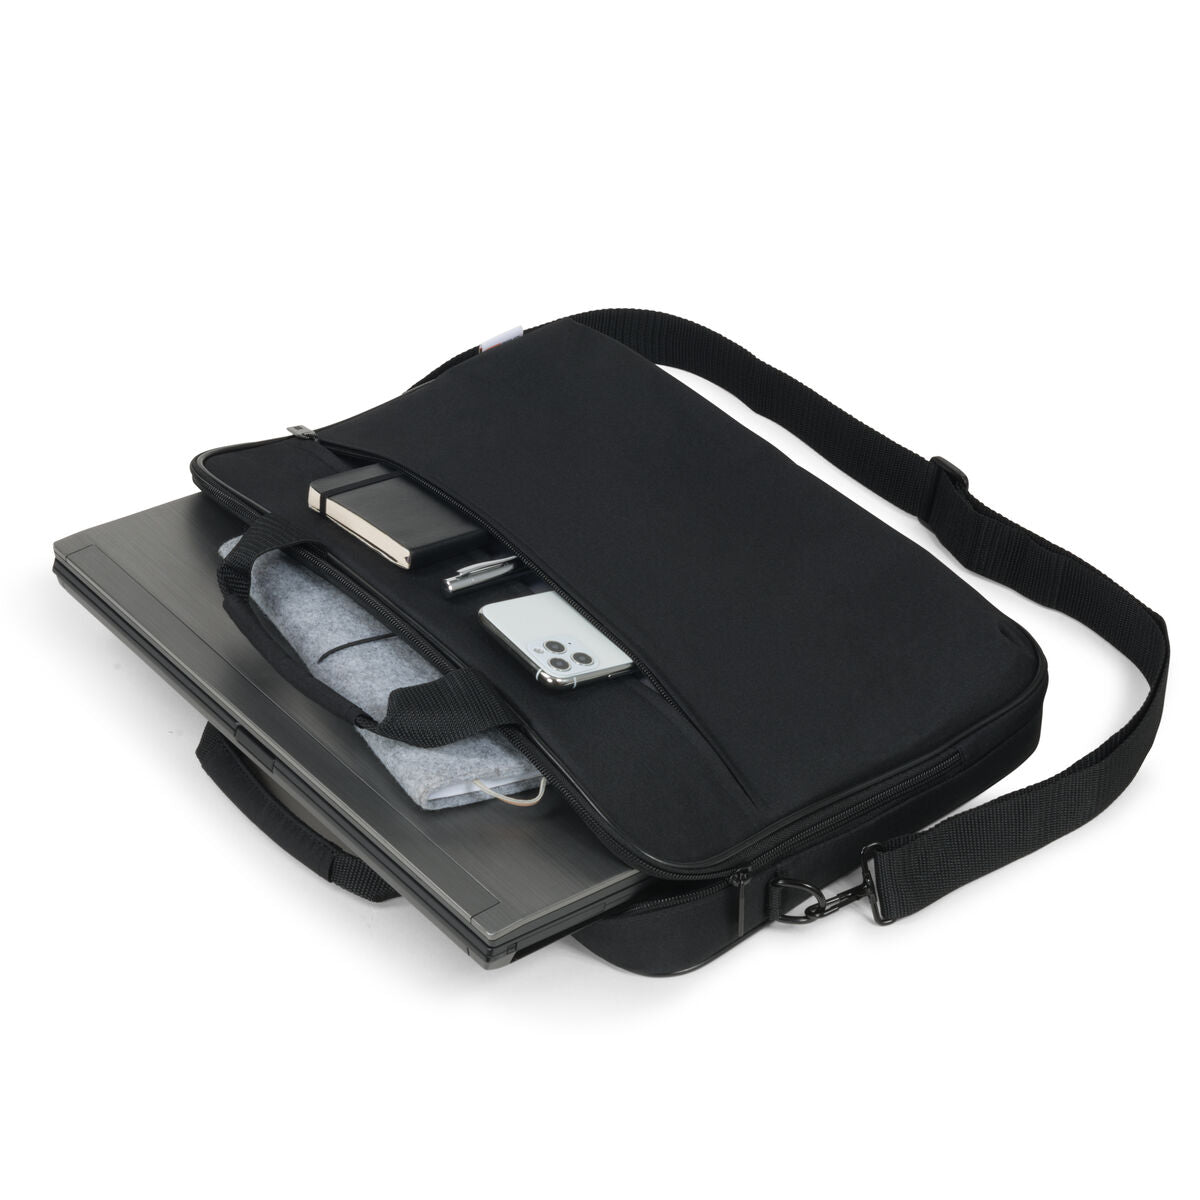 Laptop Backpack BASE XX D31797 Black